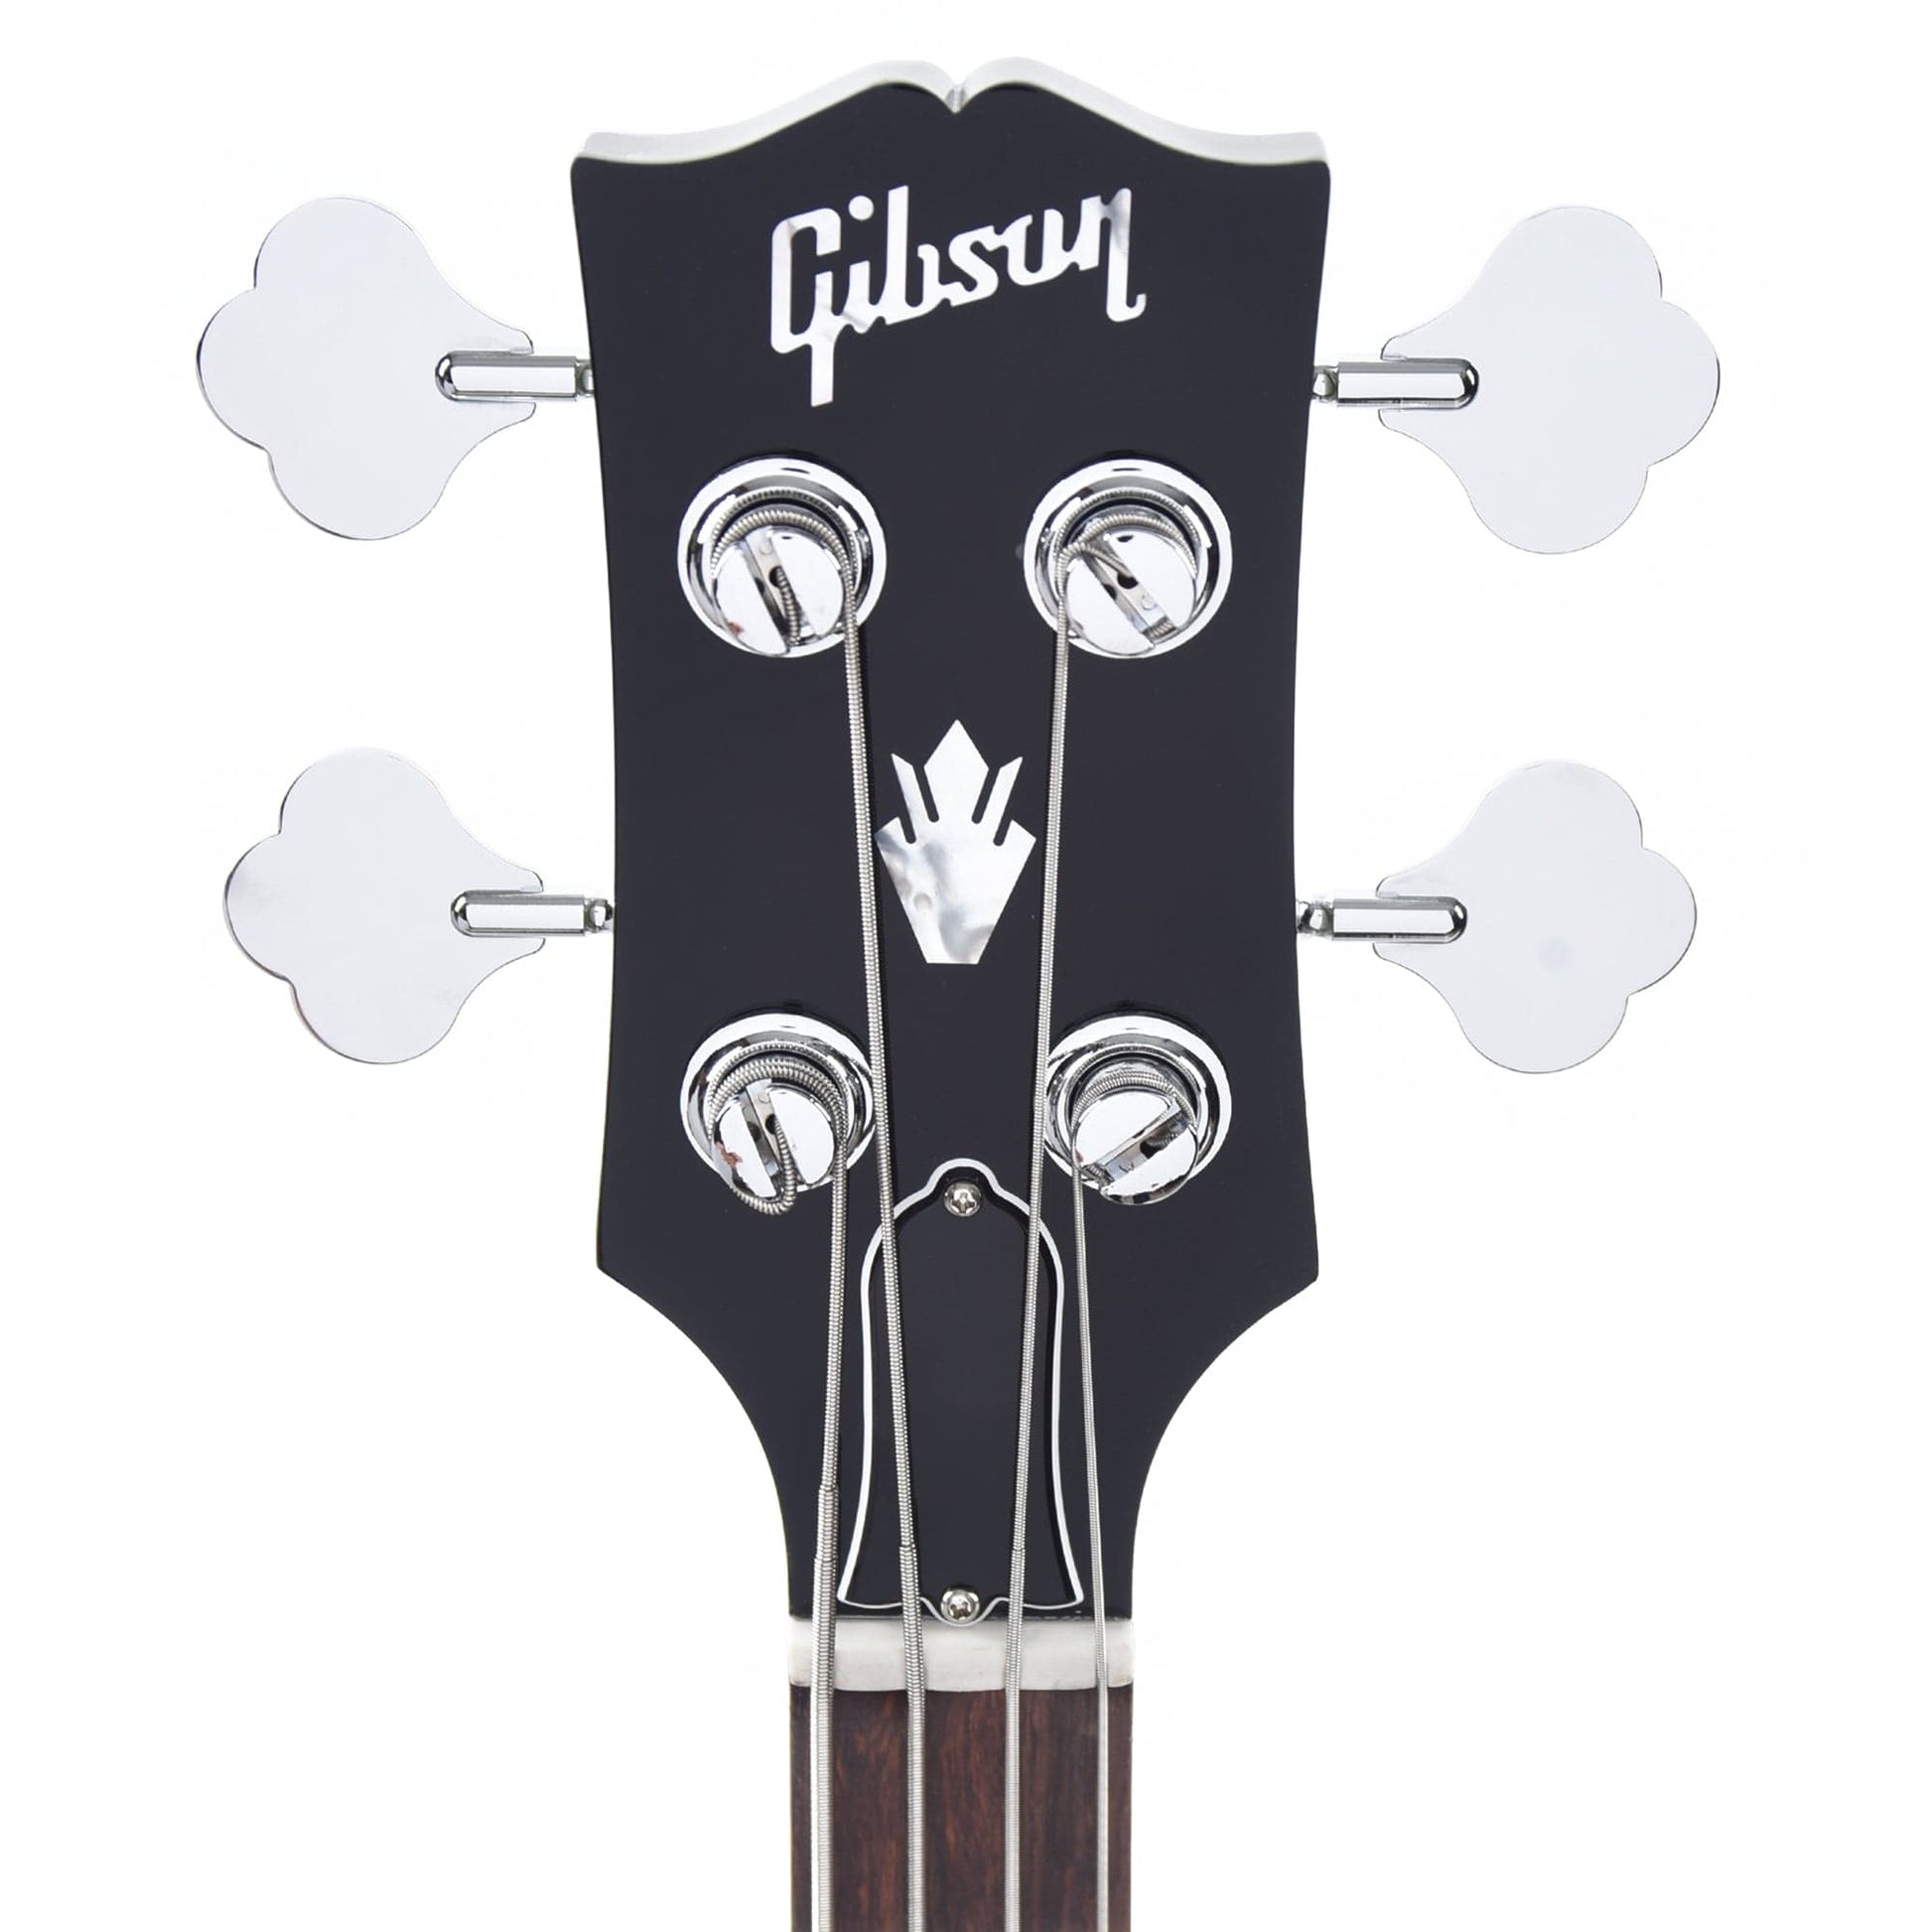 Gibson USA SG Standard Bass Olive Drab w/Tortoise Pickguard